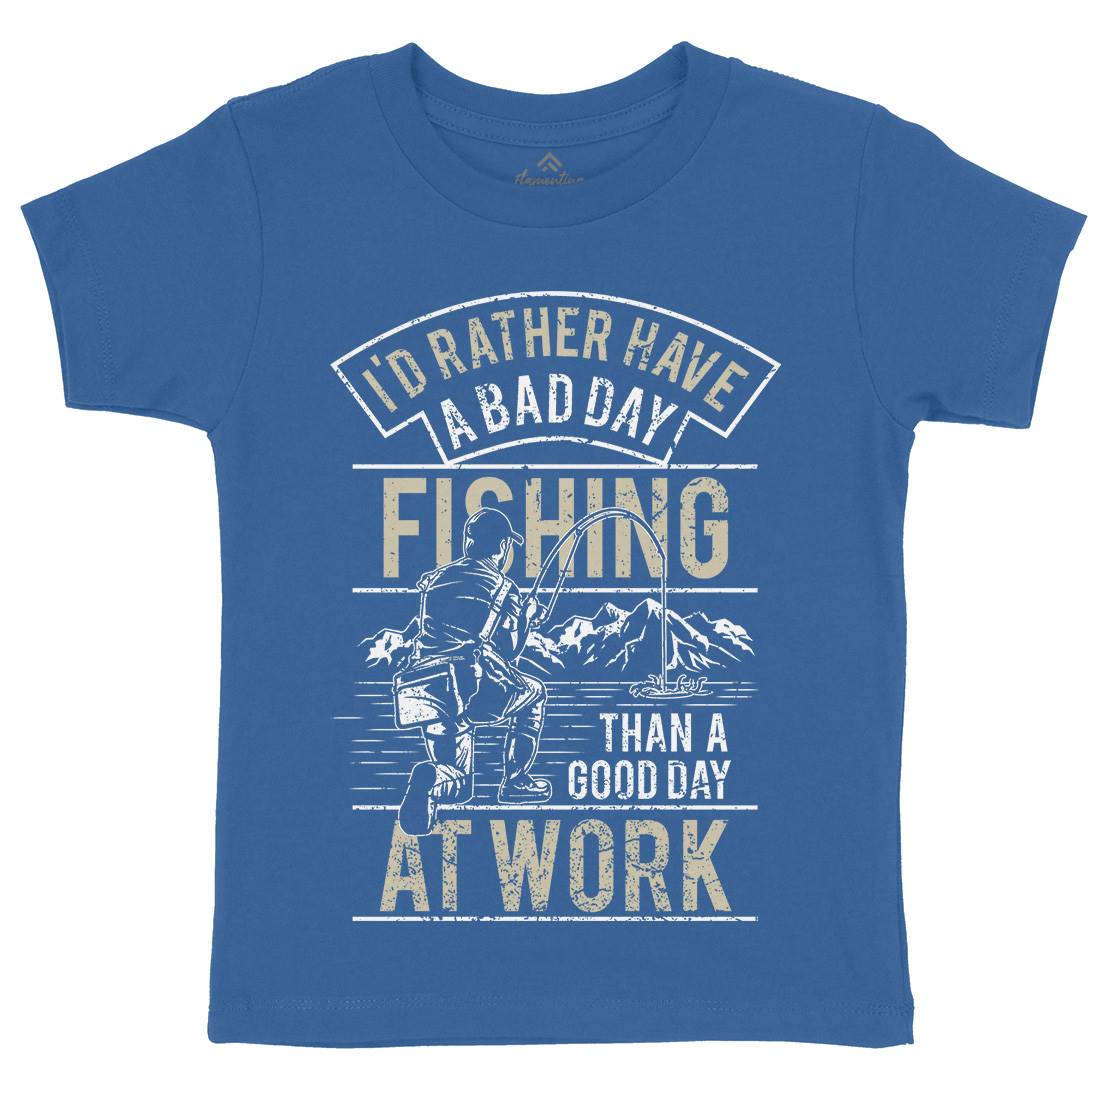 Gear Kids Crew Neck T-Shirt Fishing A660